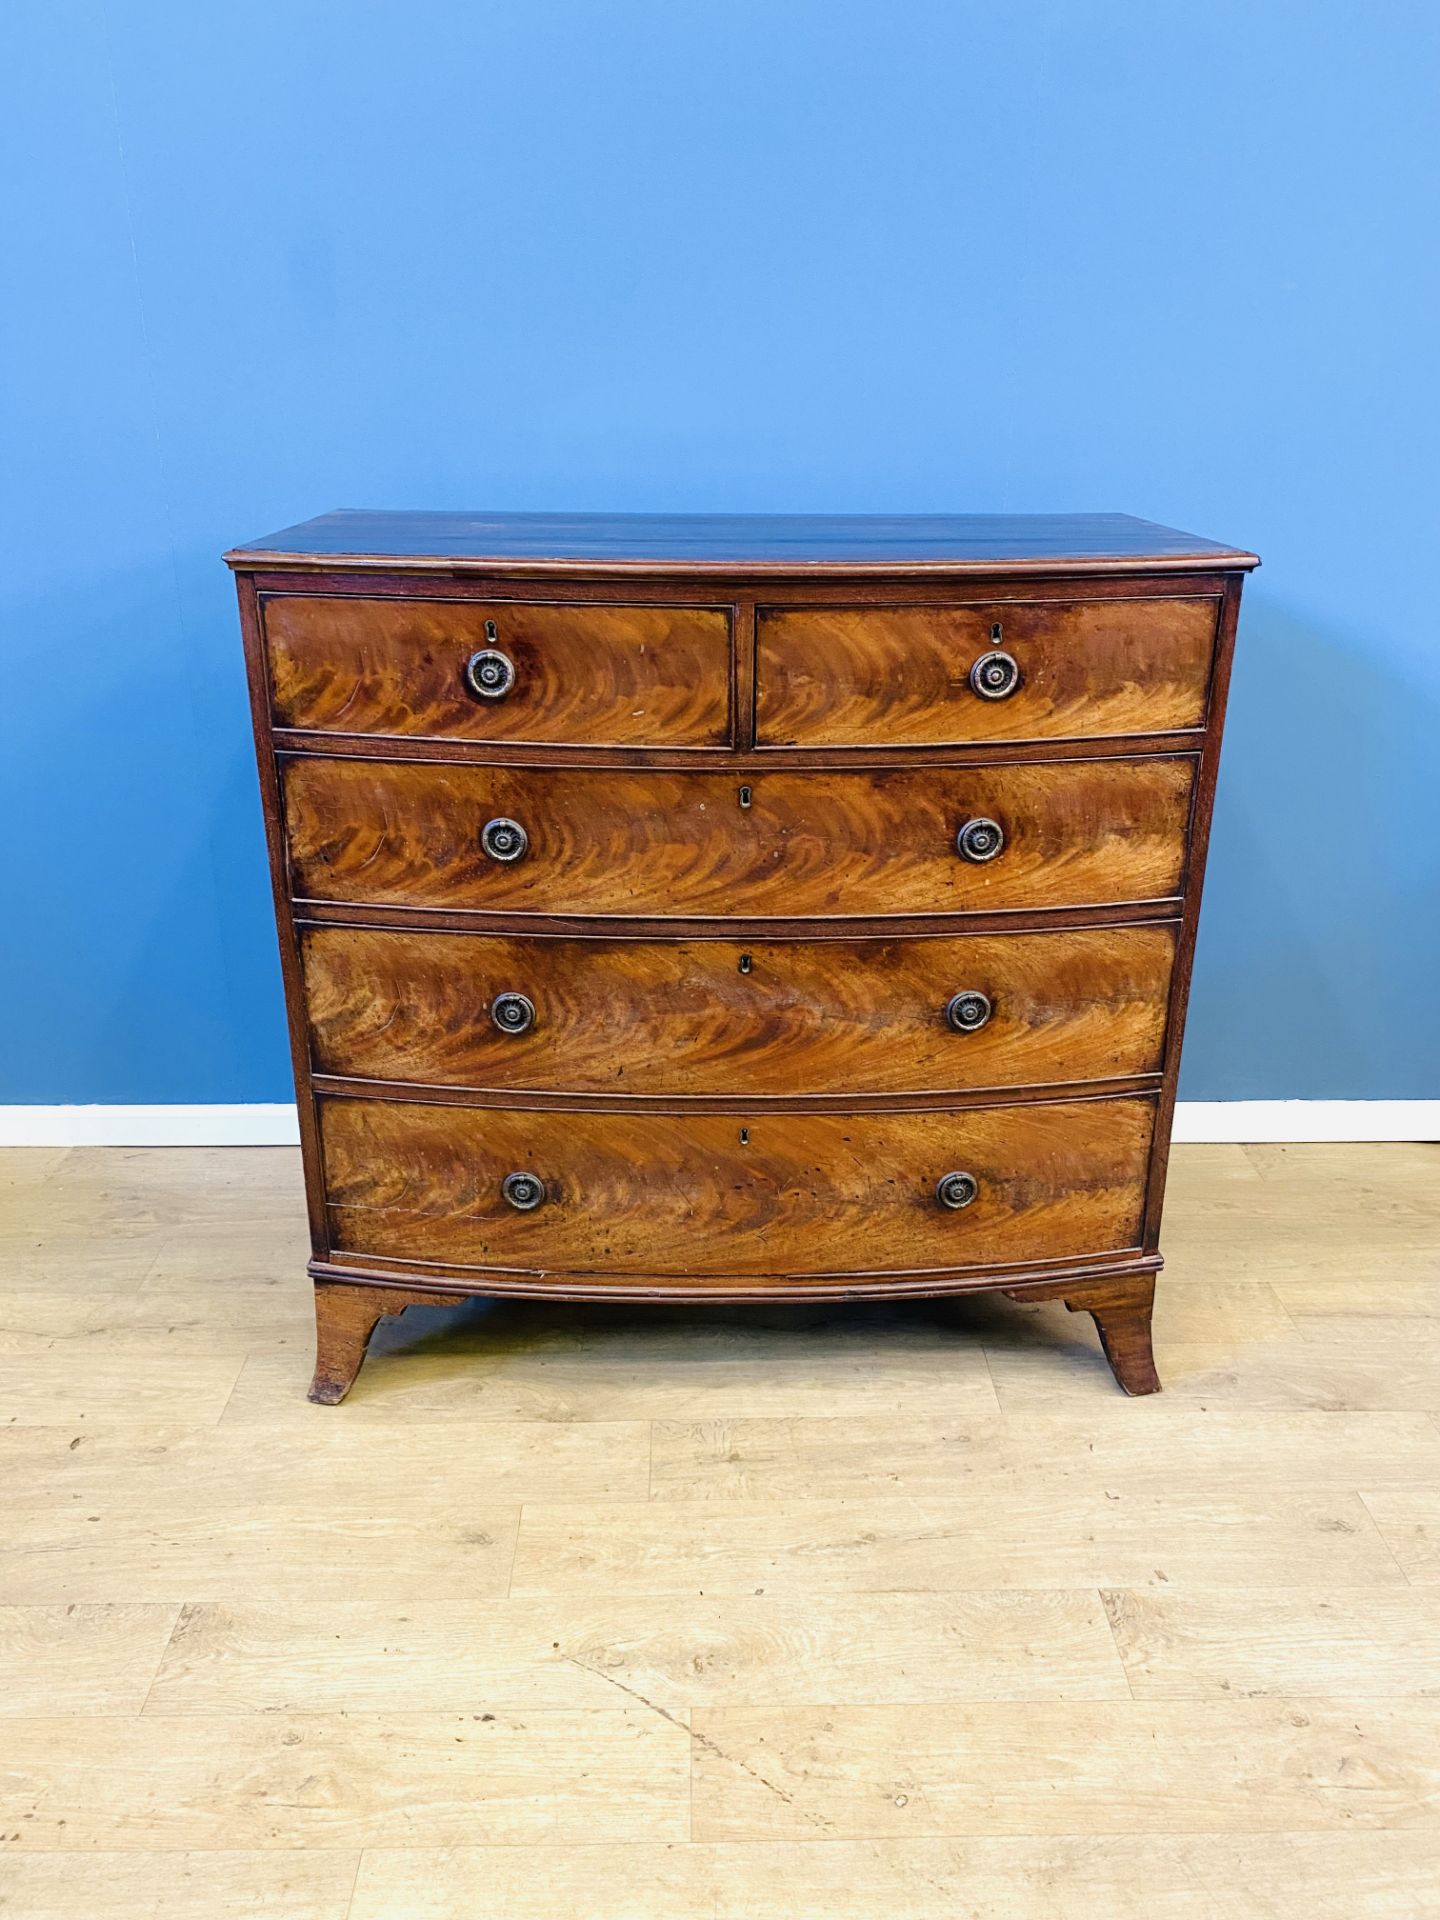 19th century mahogany chest of drawers